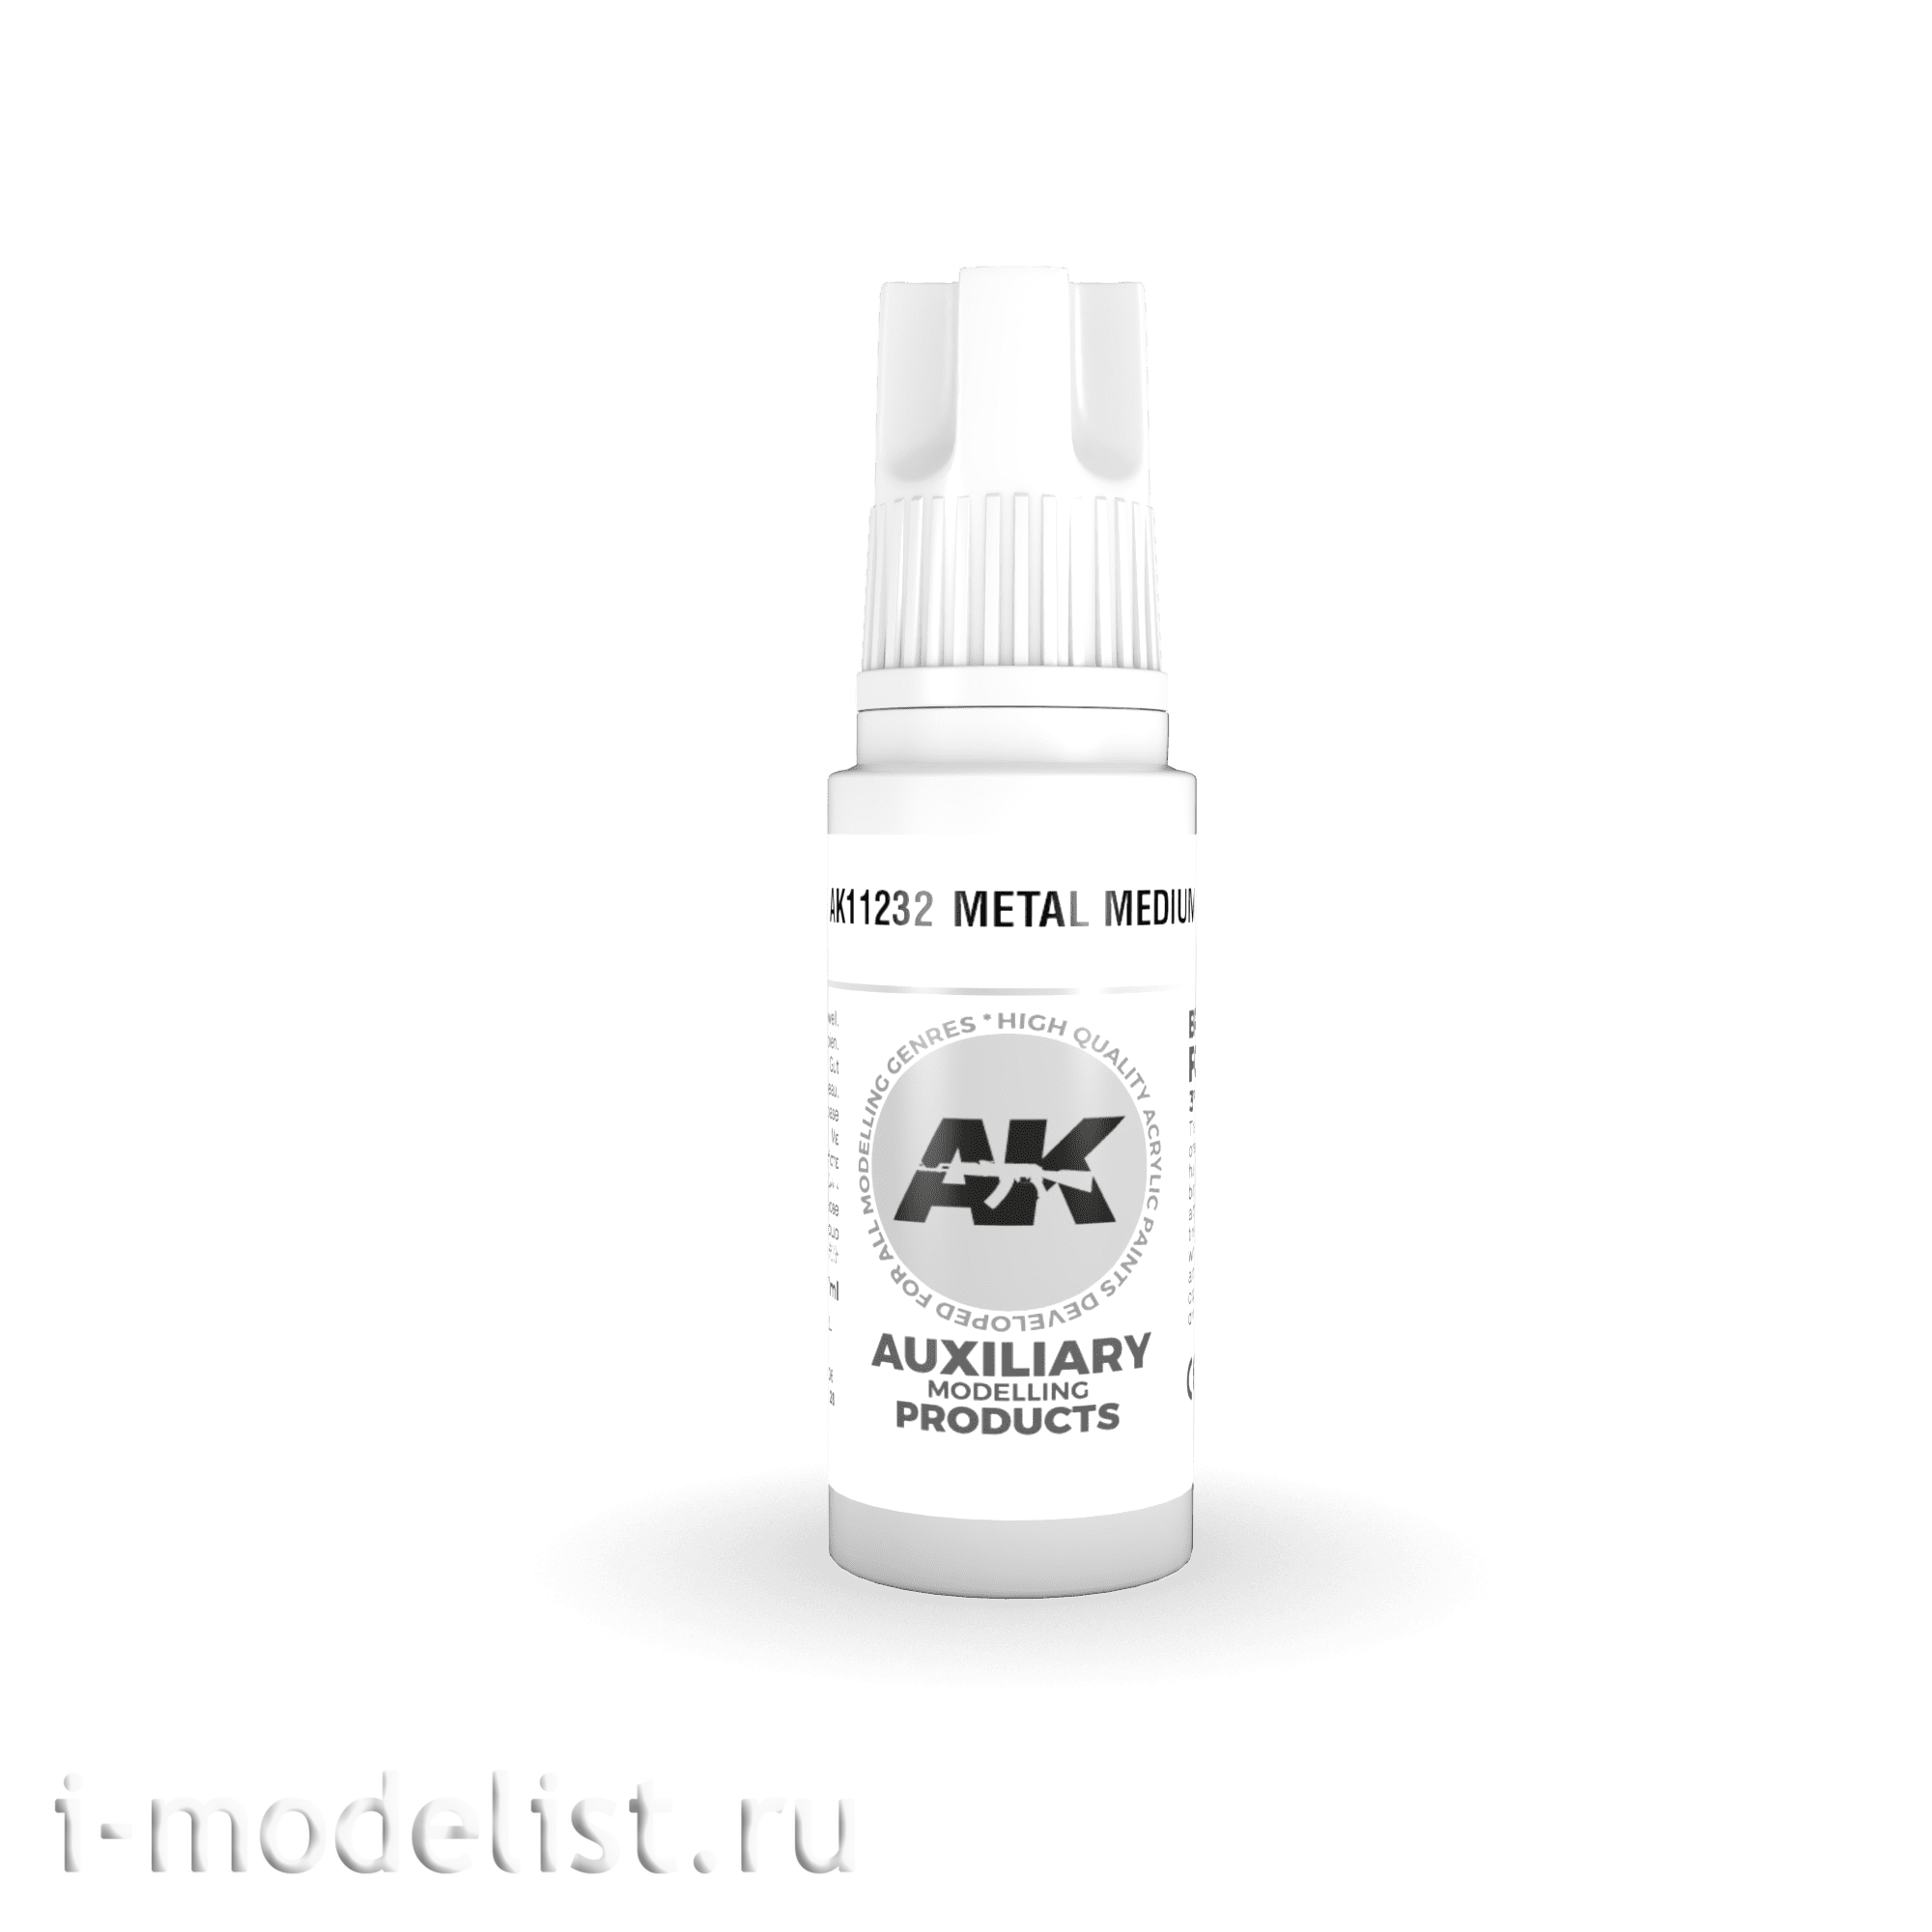 AK11232 AK Interactive acrylic Paint 3rd Generation Metal Medium 17ml